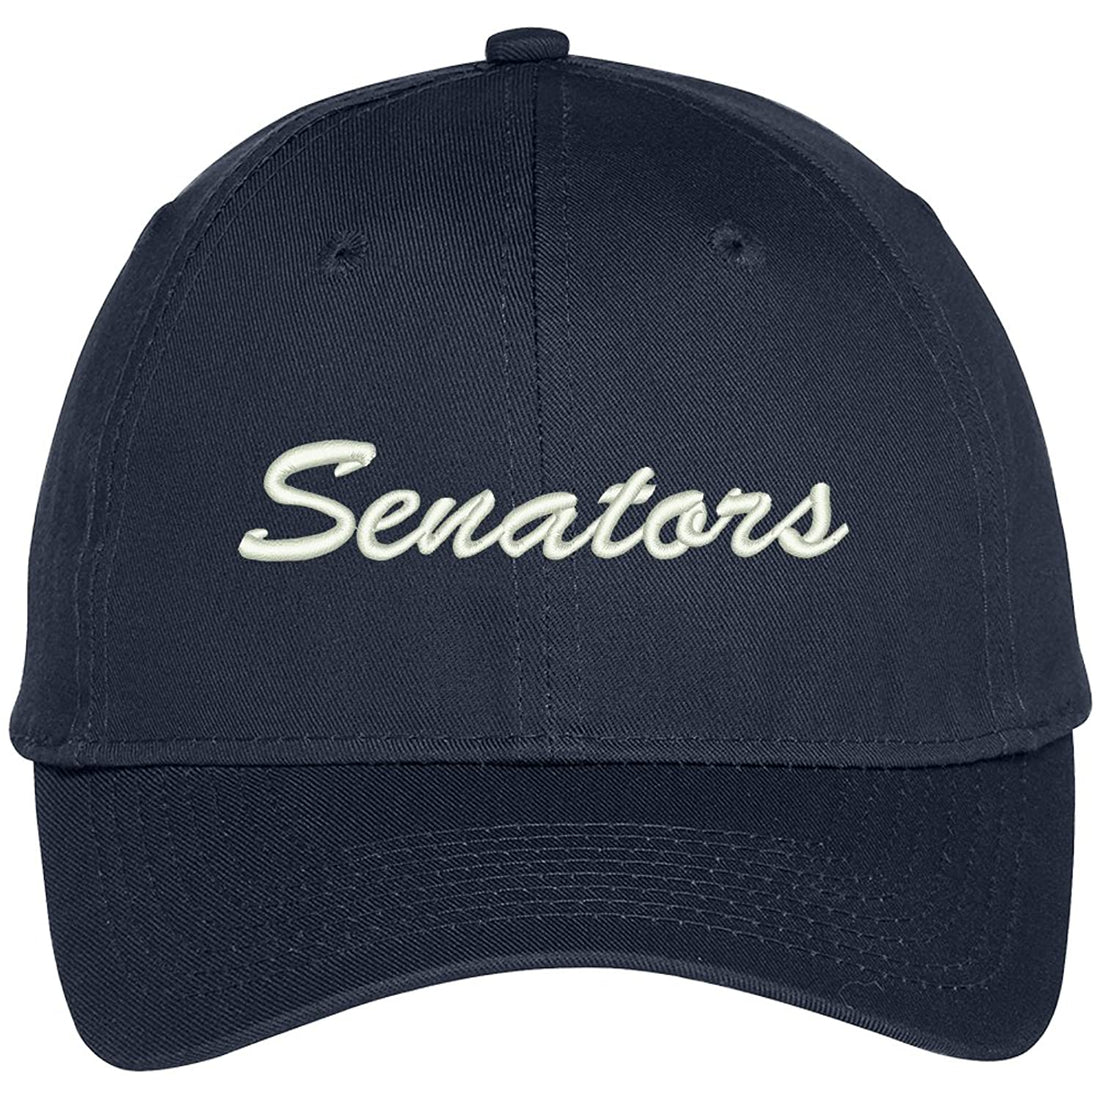 Trendy Apparel Shop Senators Embroidered Precurved Adjustable Cap